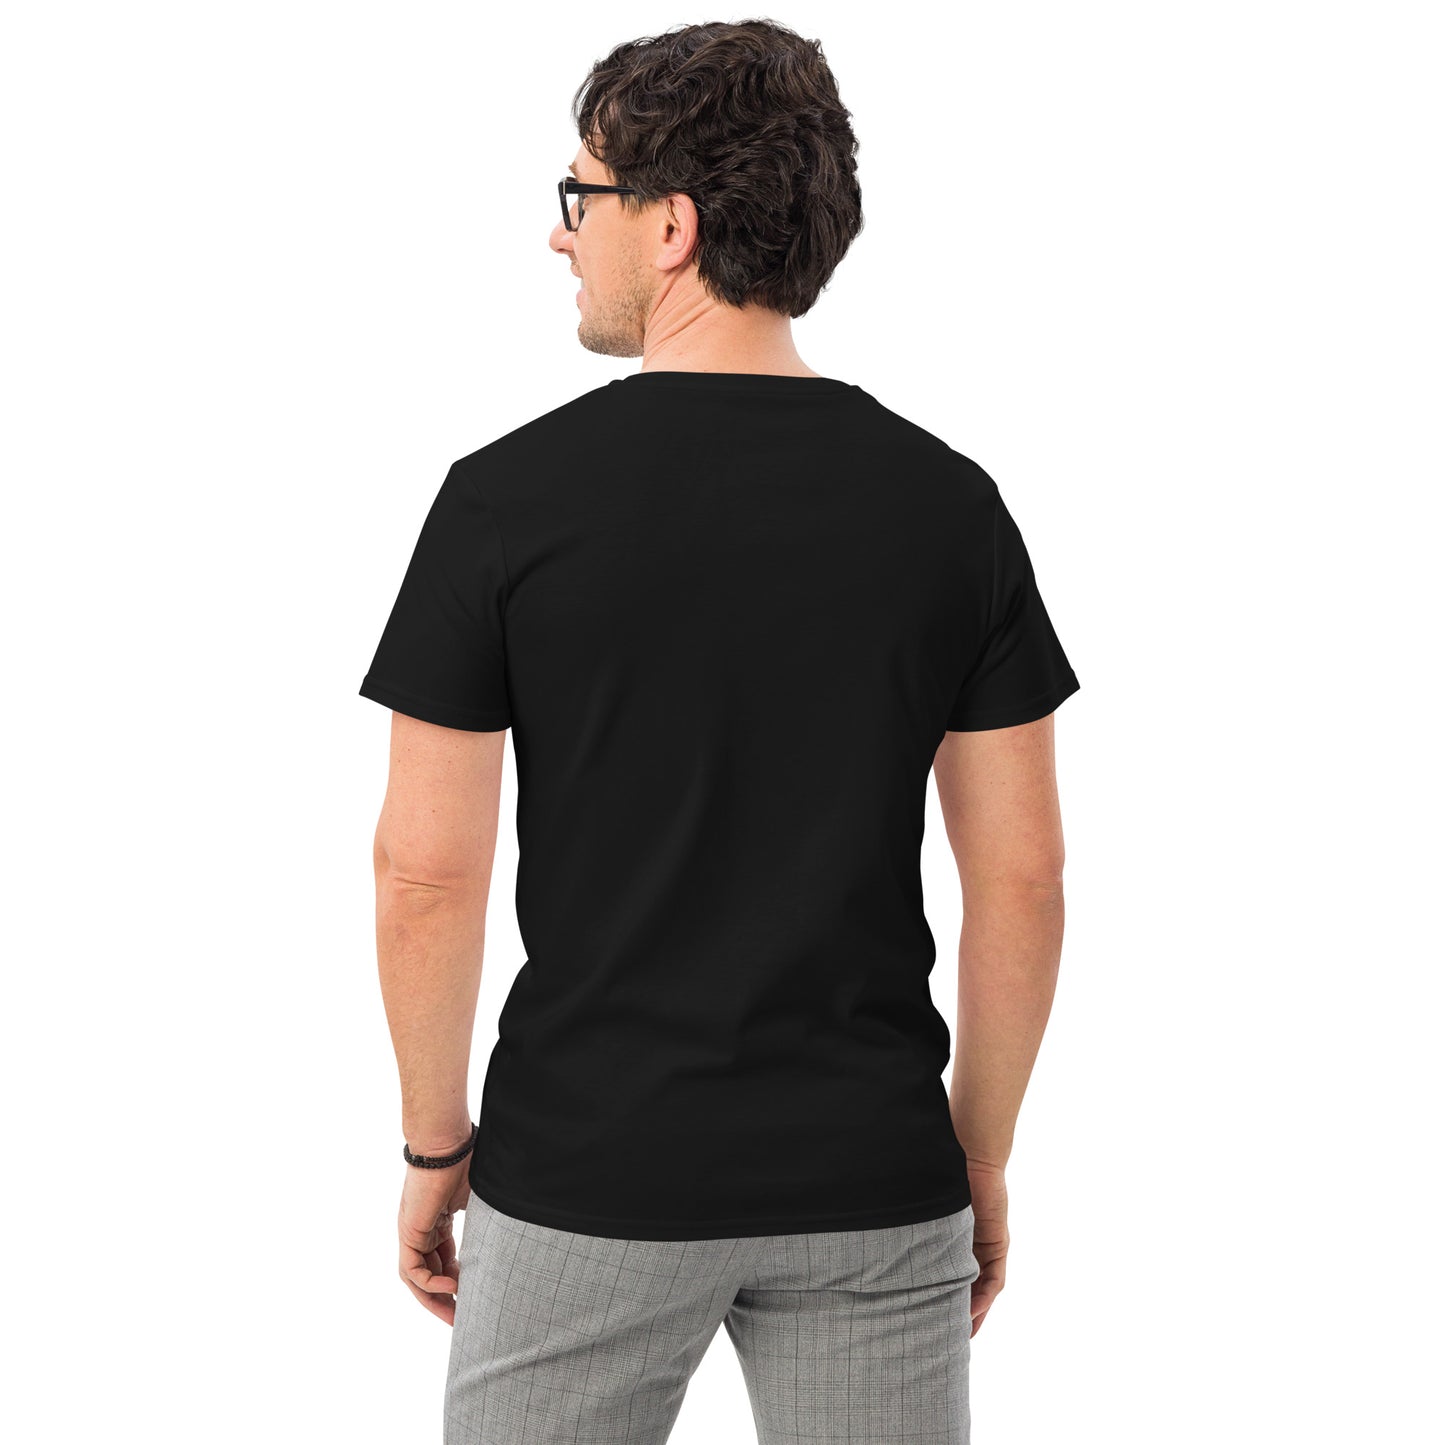 mens-premium-cotton-t-shirt-black-back-642f8ff419821